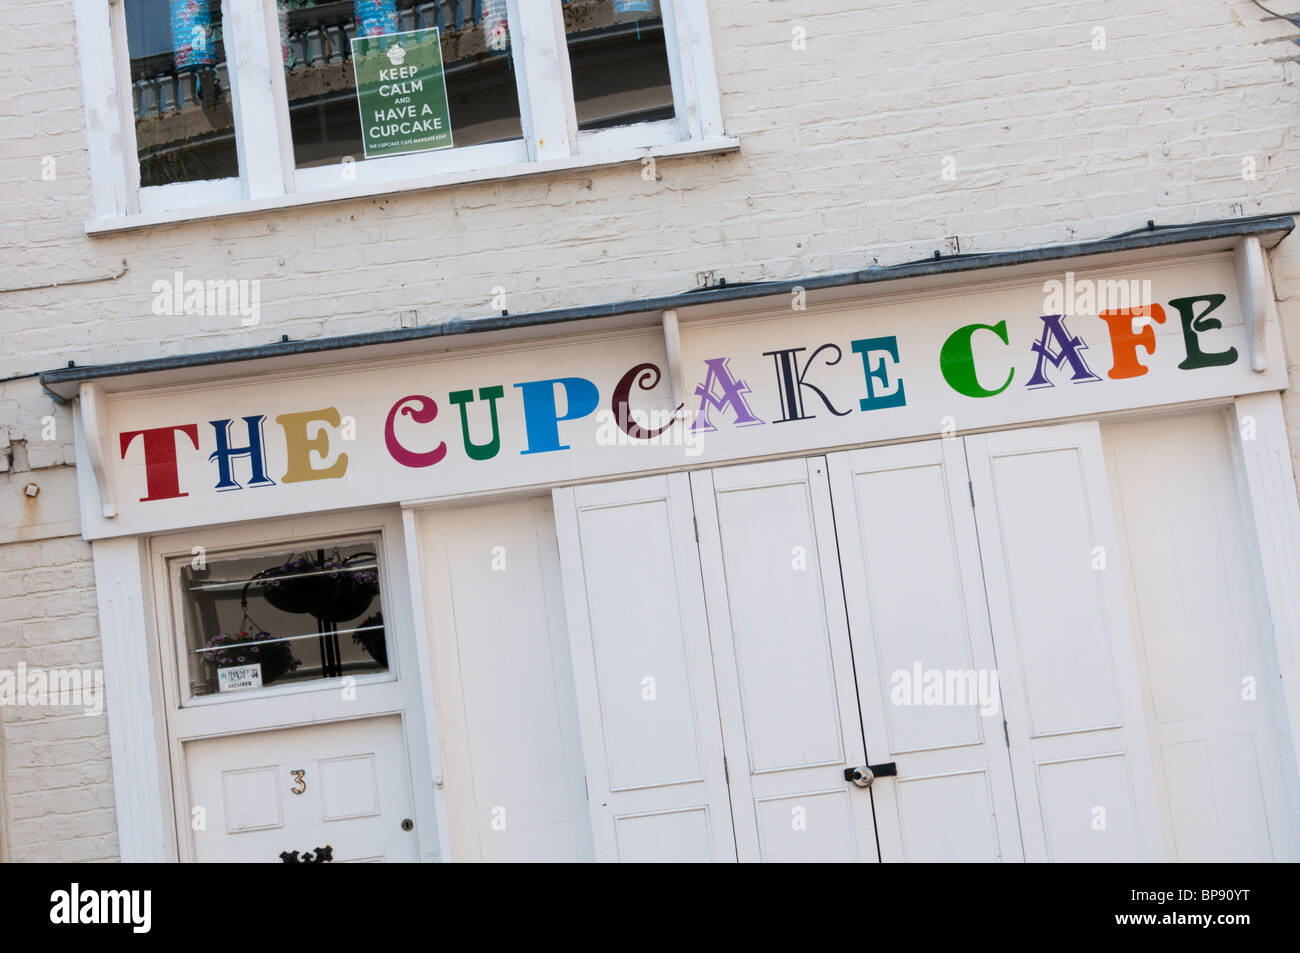 The Cupcake Cafe, Margate, Kent, England Stock Photo